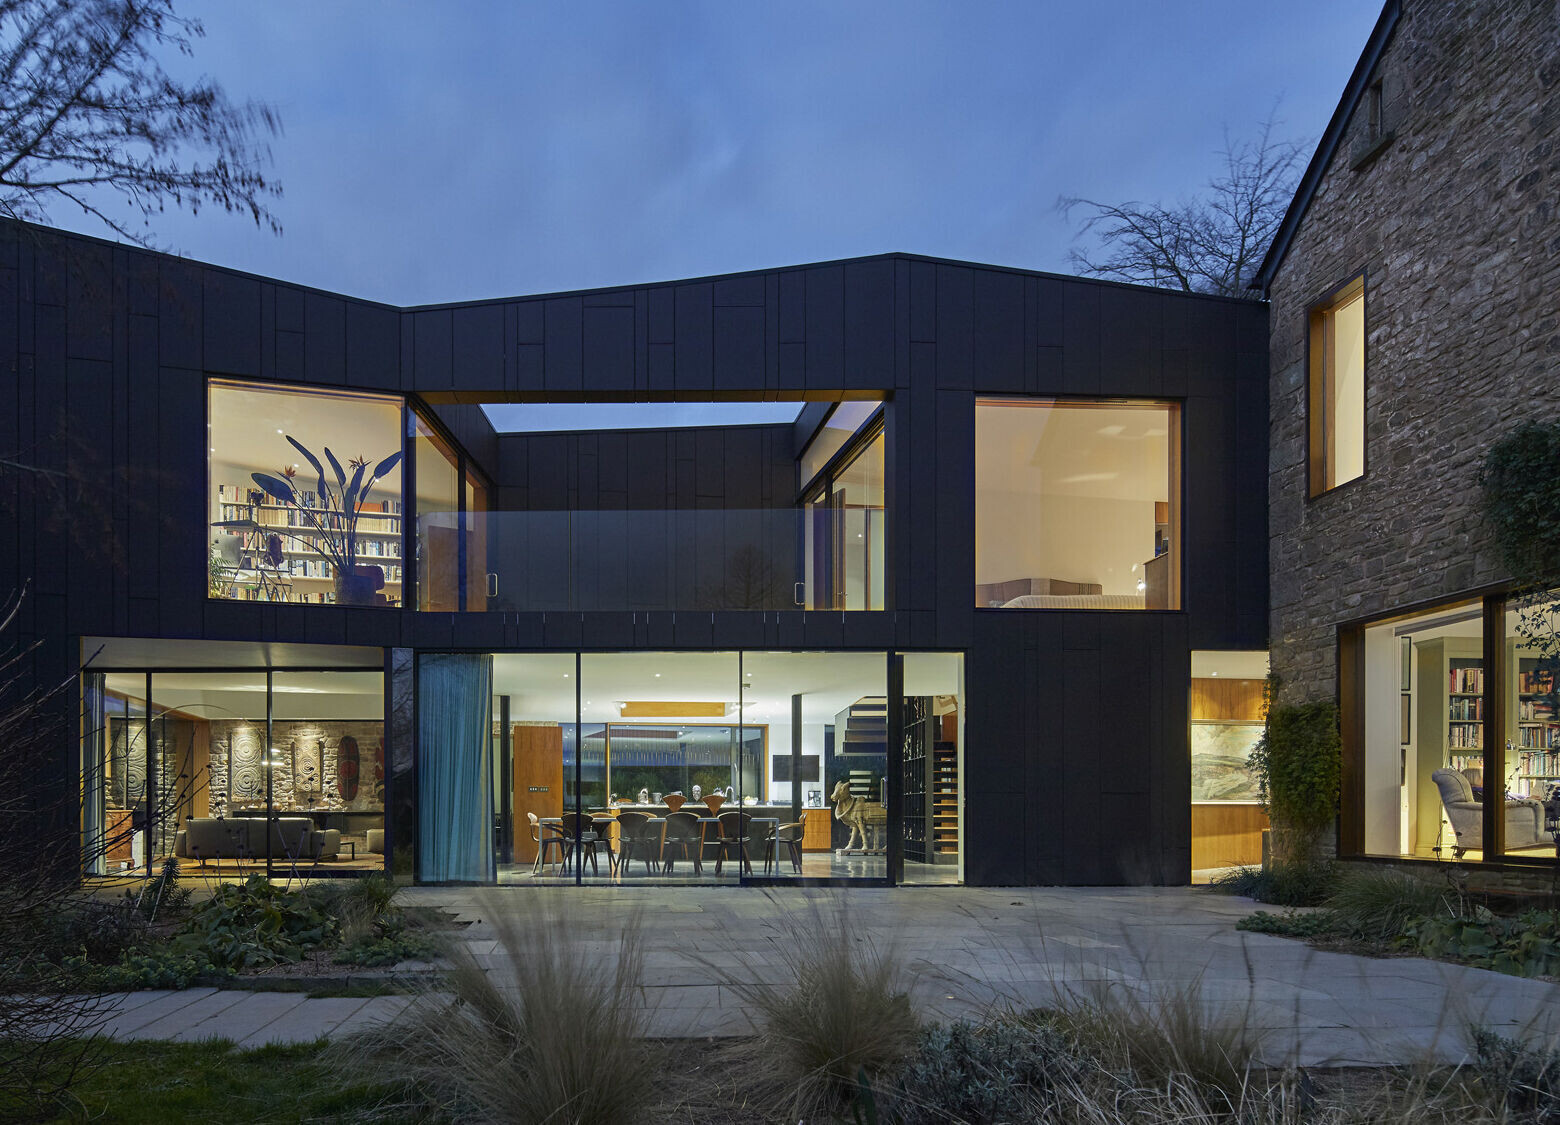 photo_credit photo : Paul Riddle | project : Windward House by Alison Brooks Architects Ltd